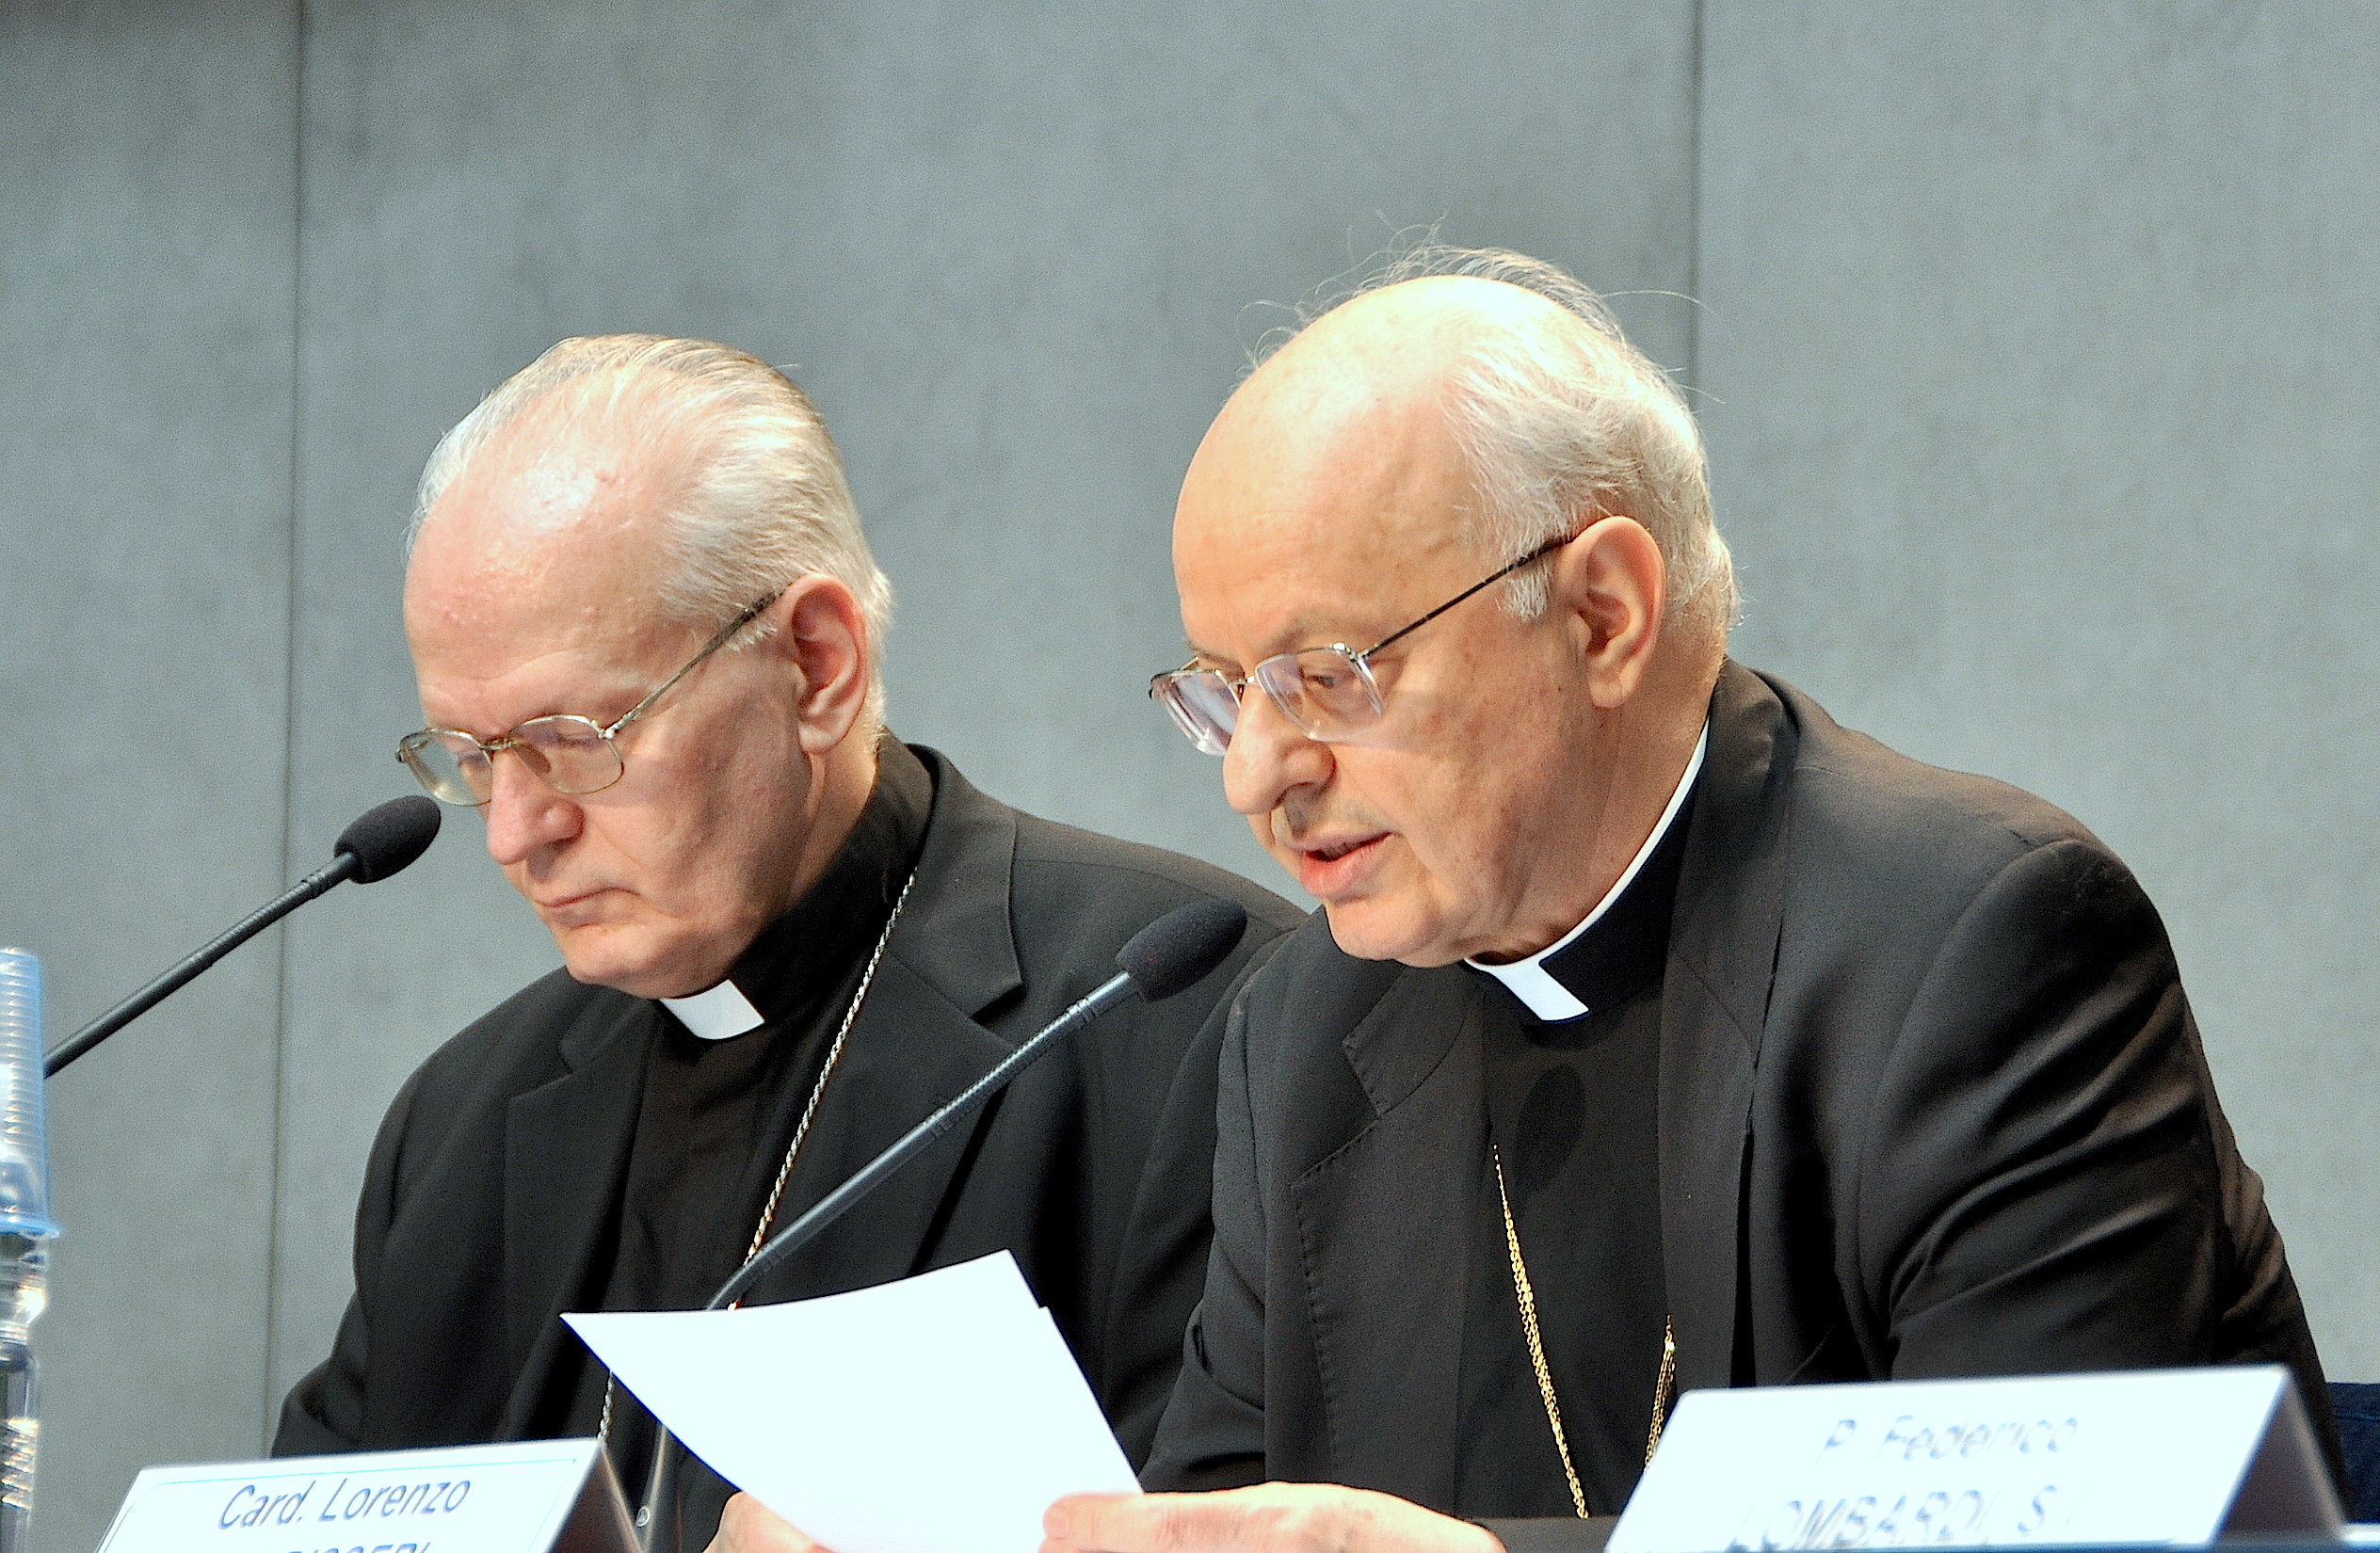 Cardinals Baldiserri and Erdó during the presentation of instrumentum laboris in the vatican press room - 23 June 2015